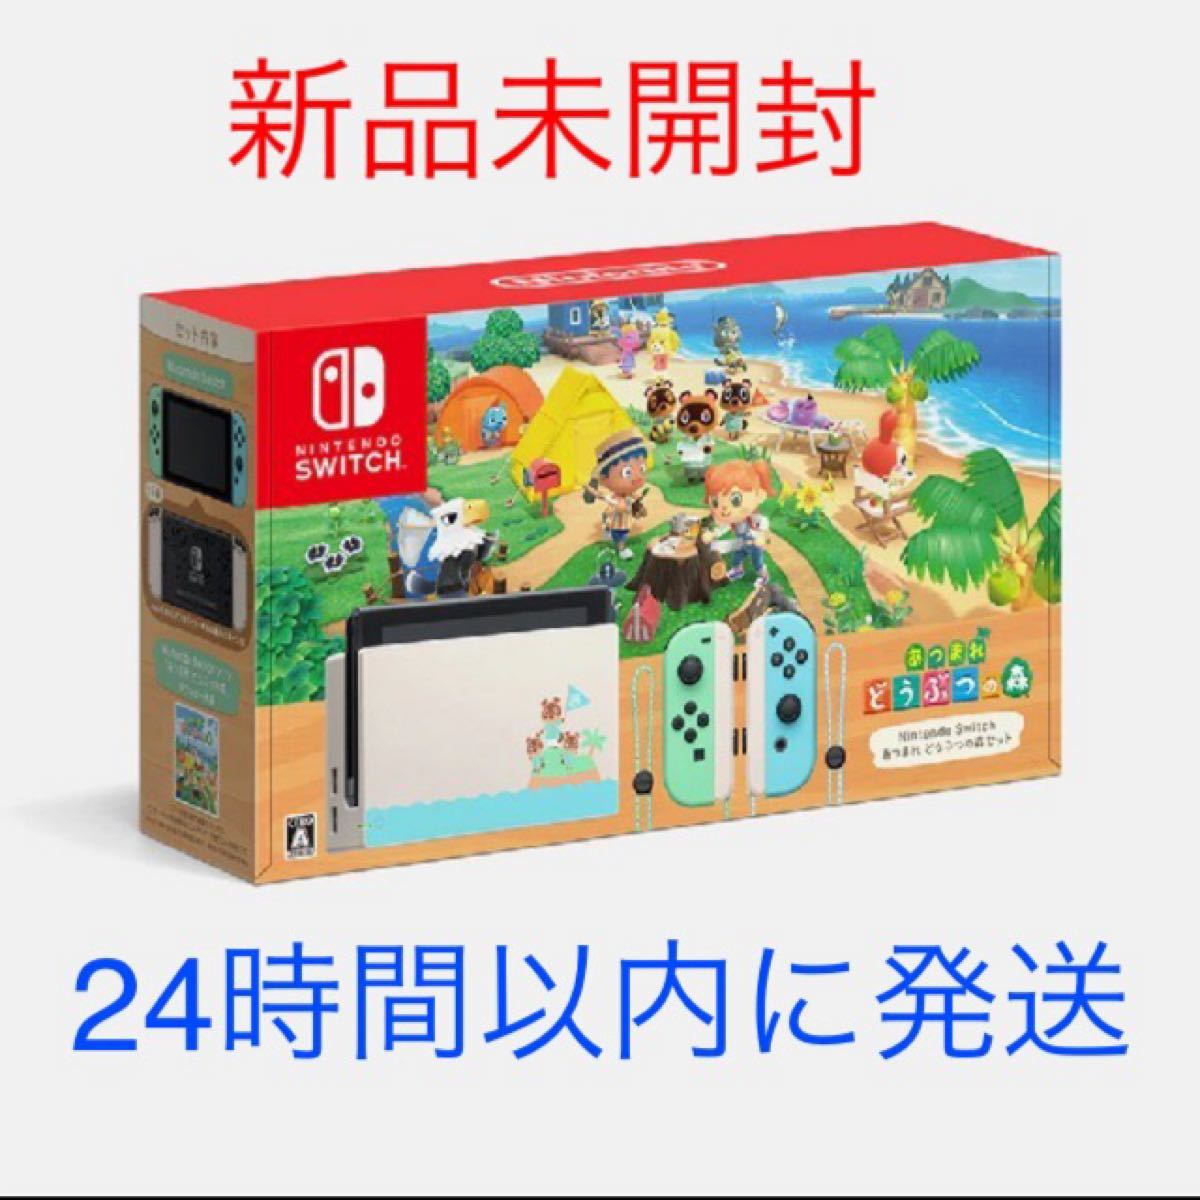 Nintendo Switch あつまれどうぶつの森セット 本体 新品未使用